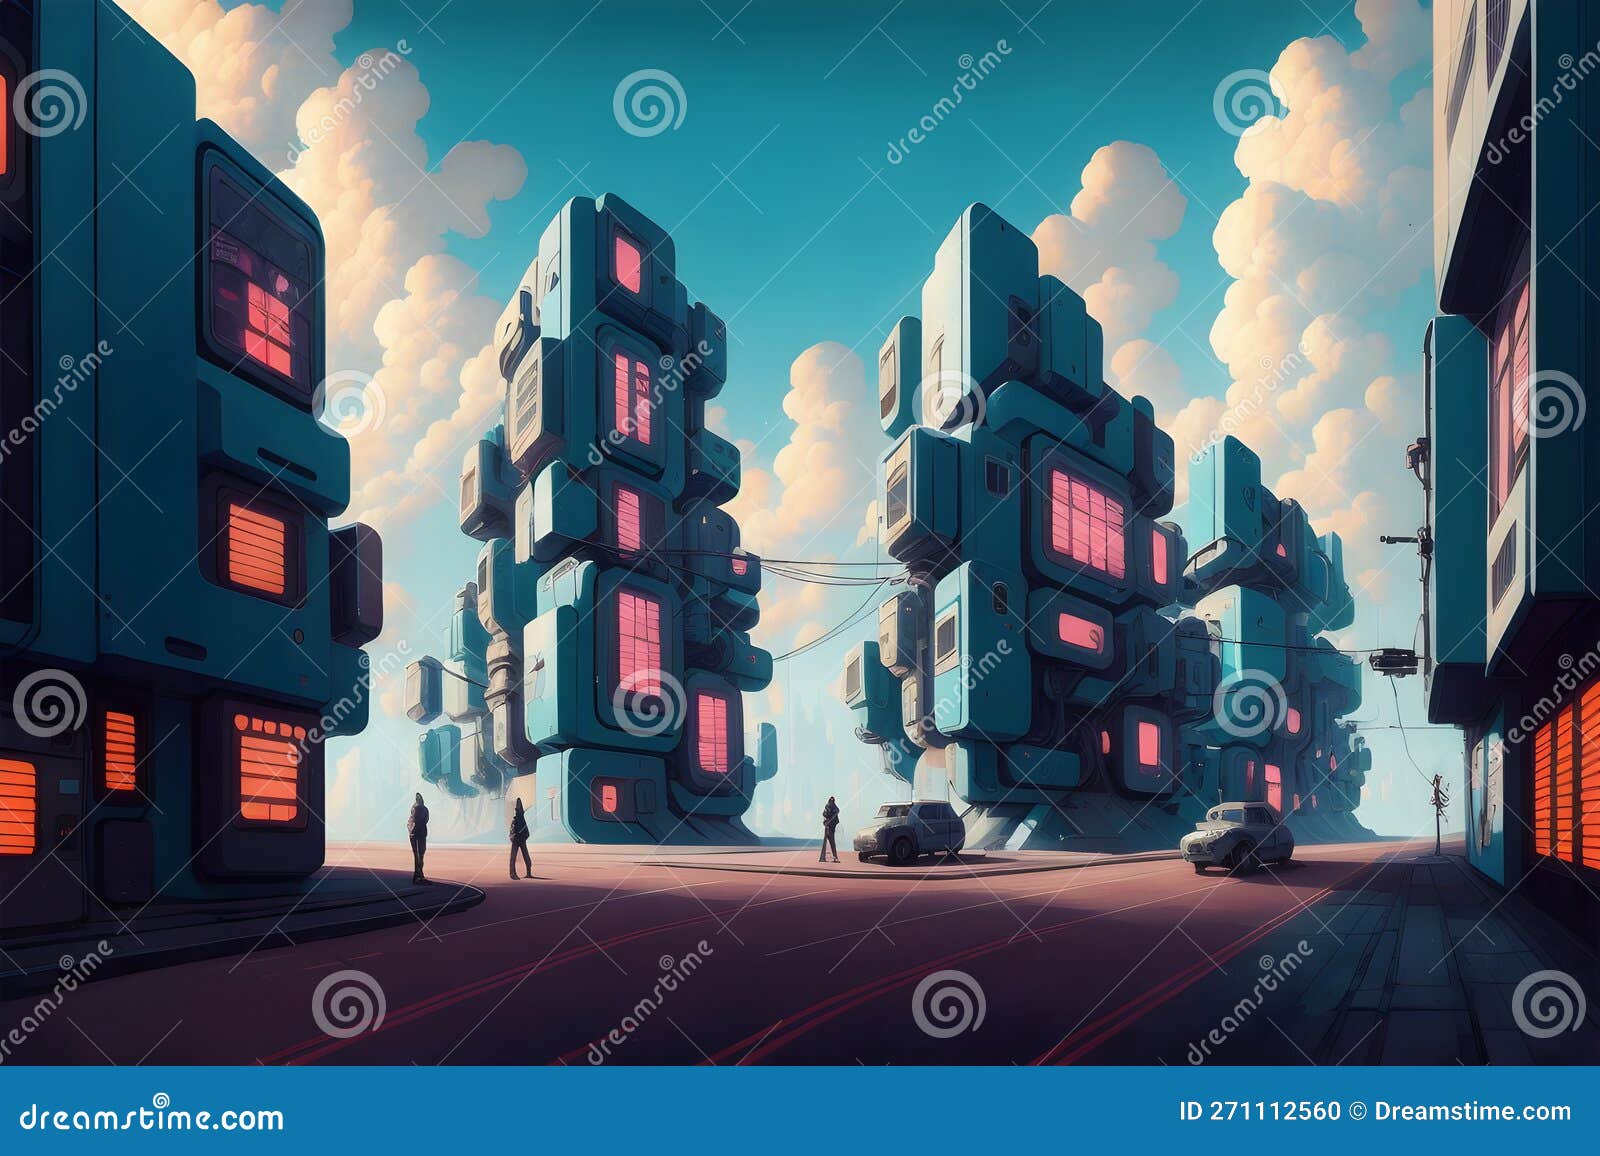 Sci-fi Fantasy City, Cyberpunk Buildings Illustration. Neon Colors